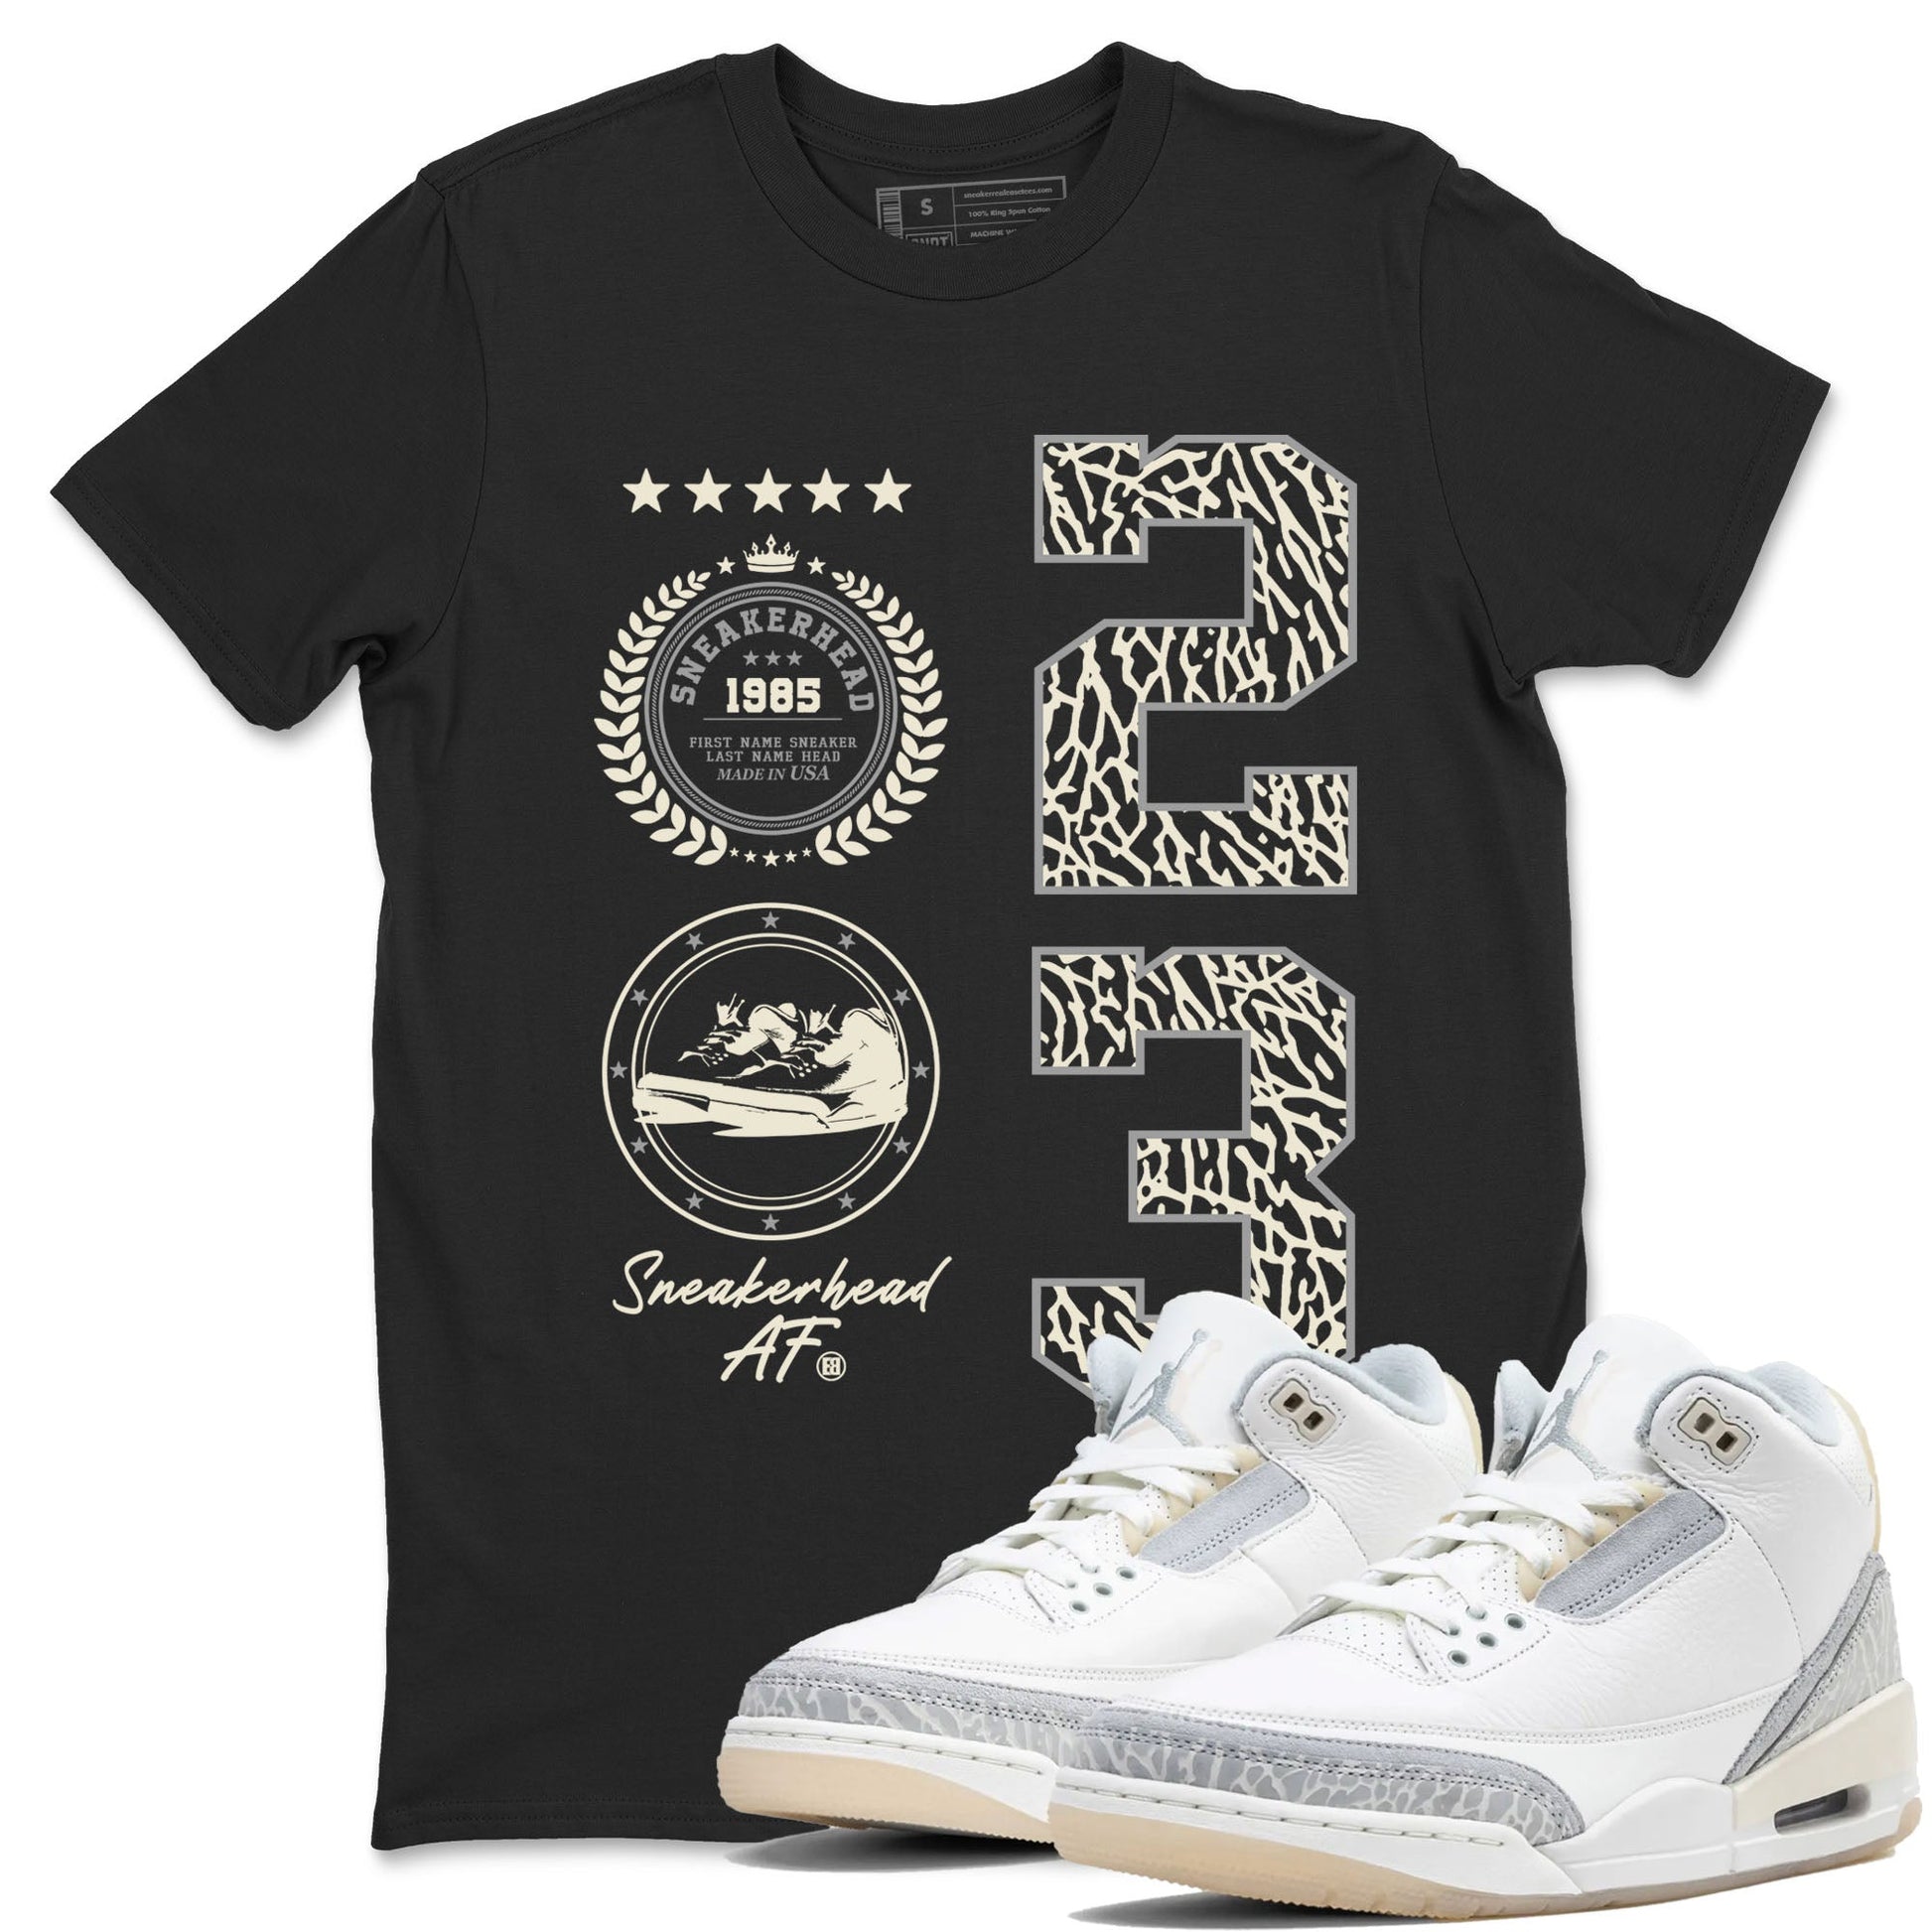 Sneaker Emblem sneaker match tees to Ivory 3s street fashion brand for shirts to match Jordans SNRT Sneaker Tees Air Jordan 3 Craft 'Ivory' unisex t-shirt Black 1 unisex shirt